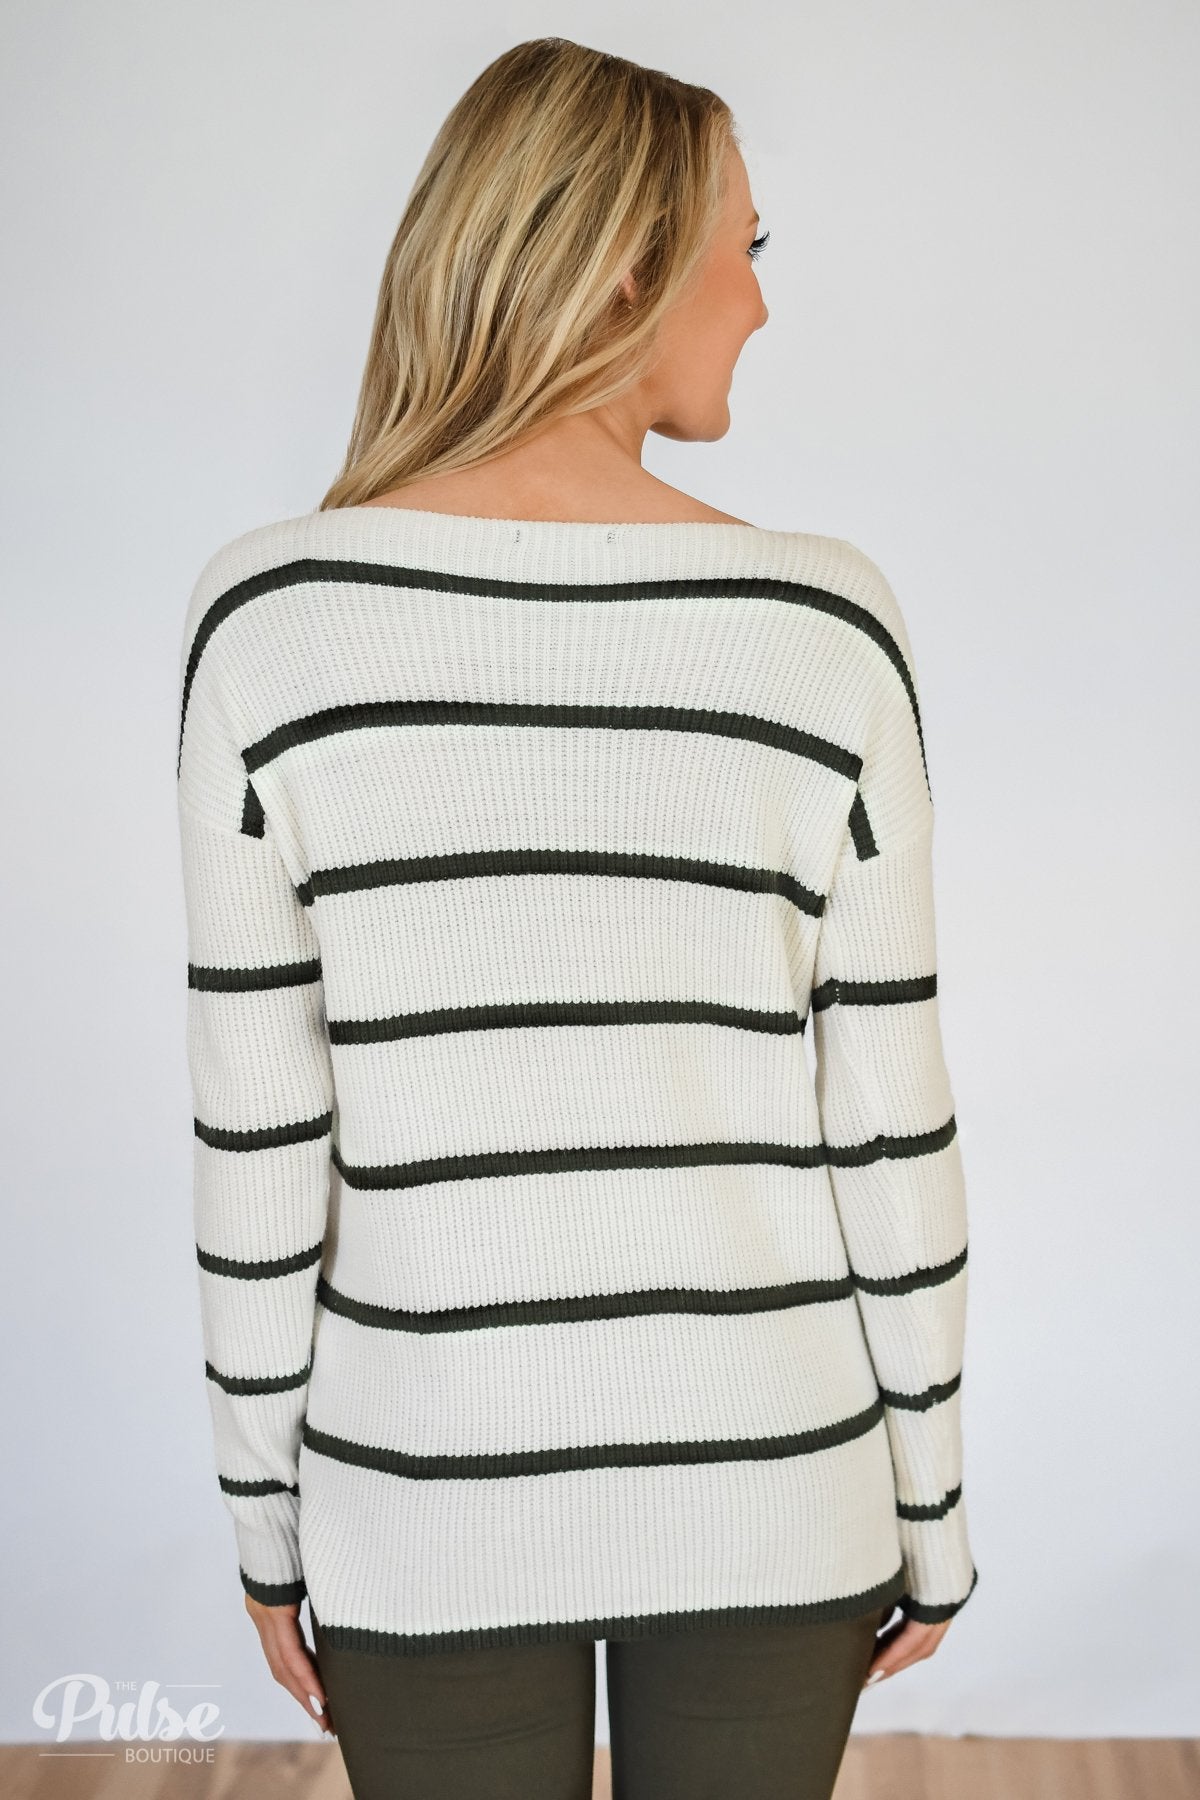 Side by Side Striped Knit Sweater- Ivory & Olive